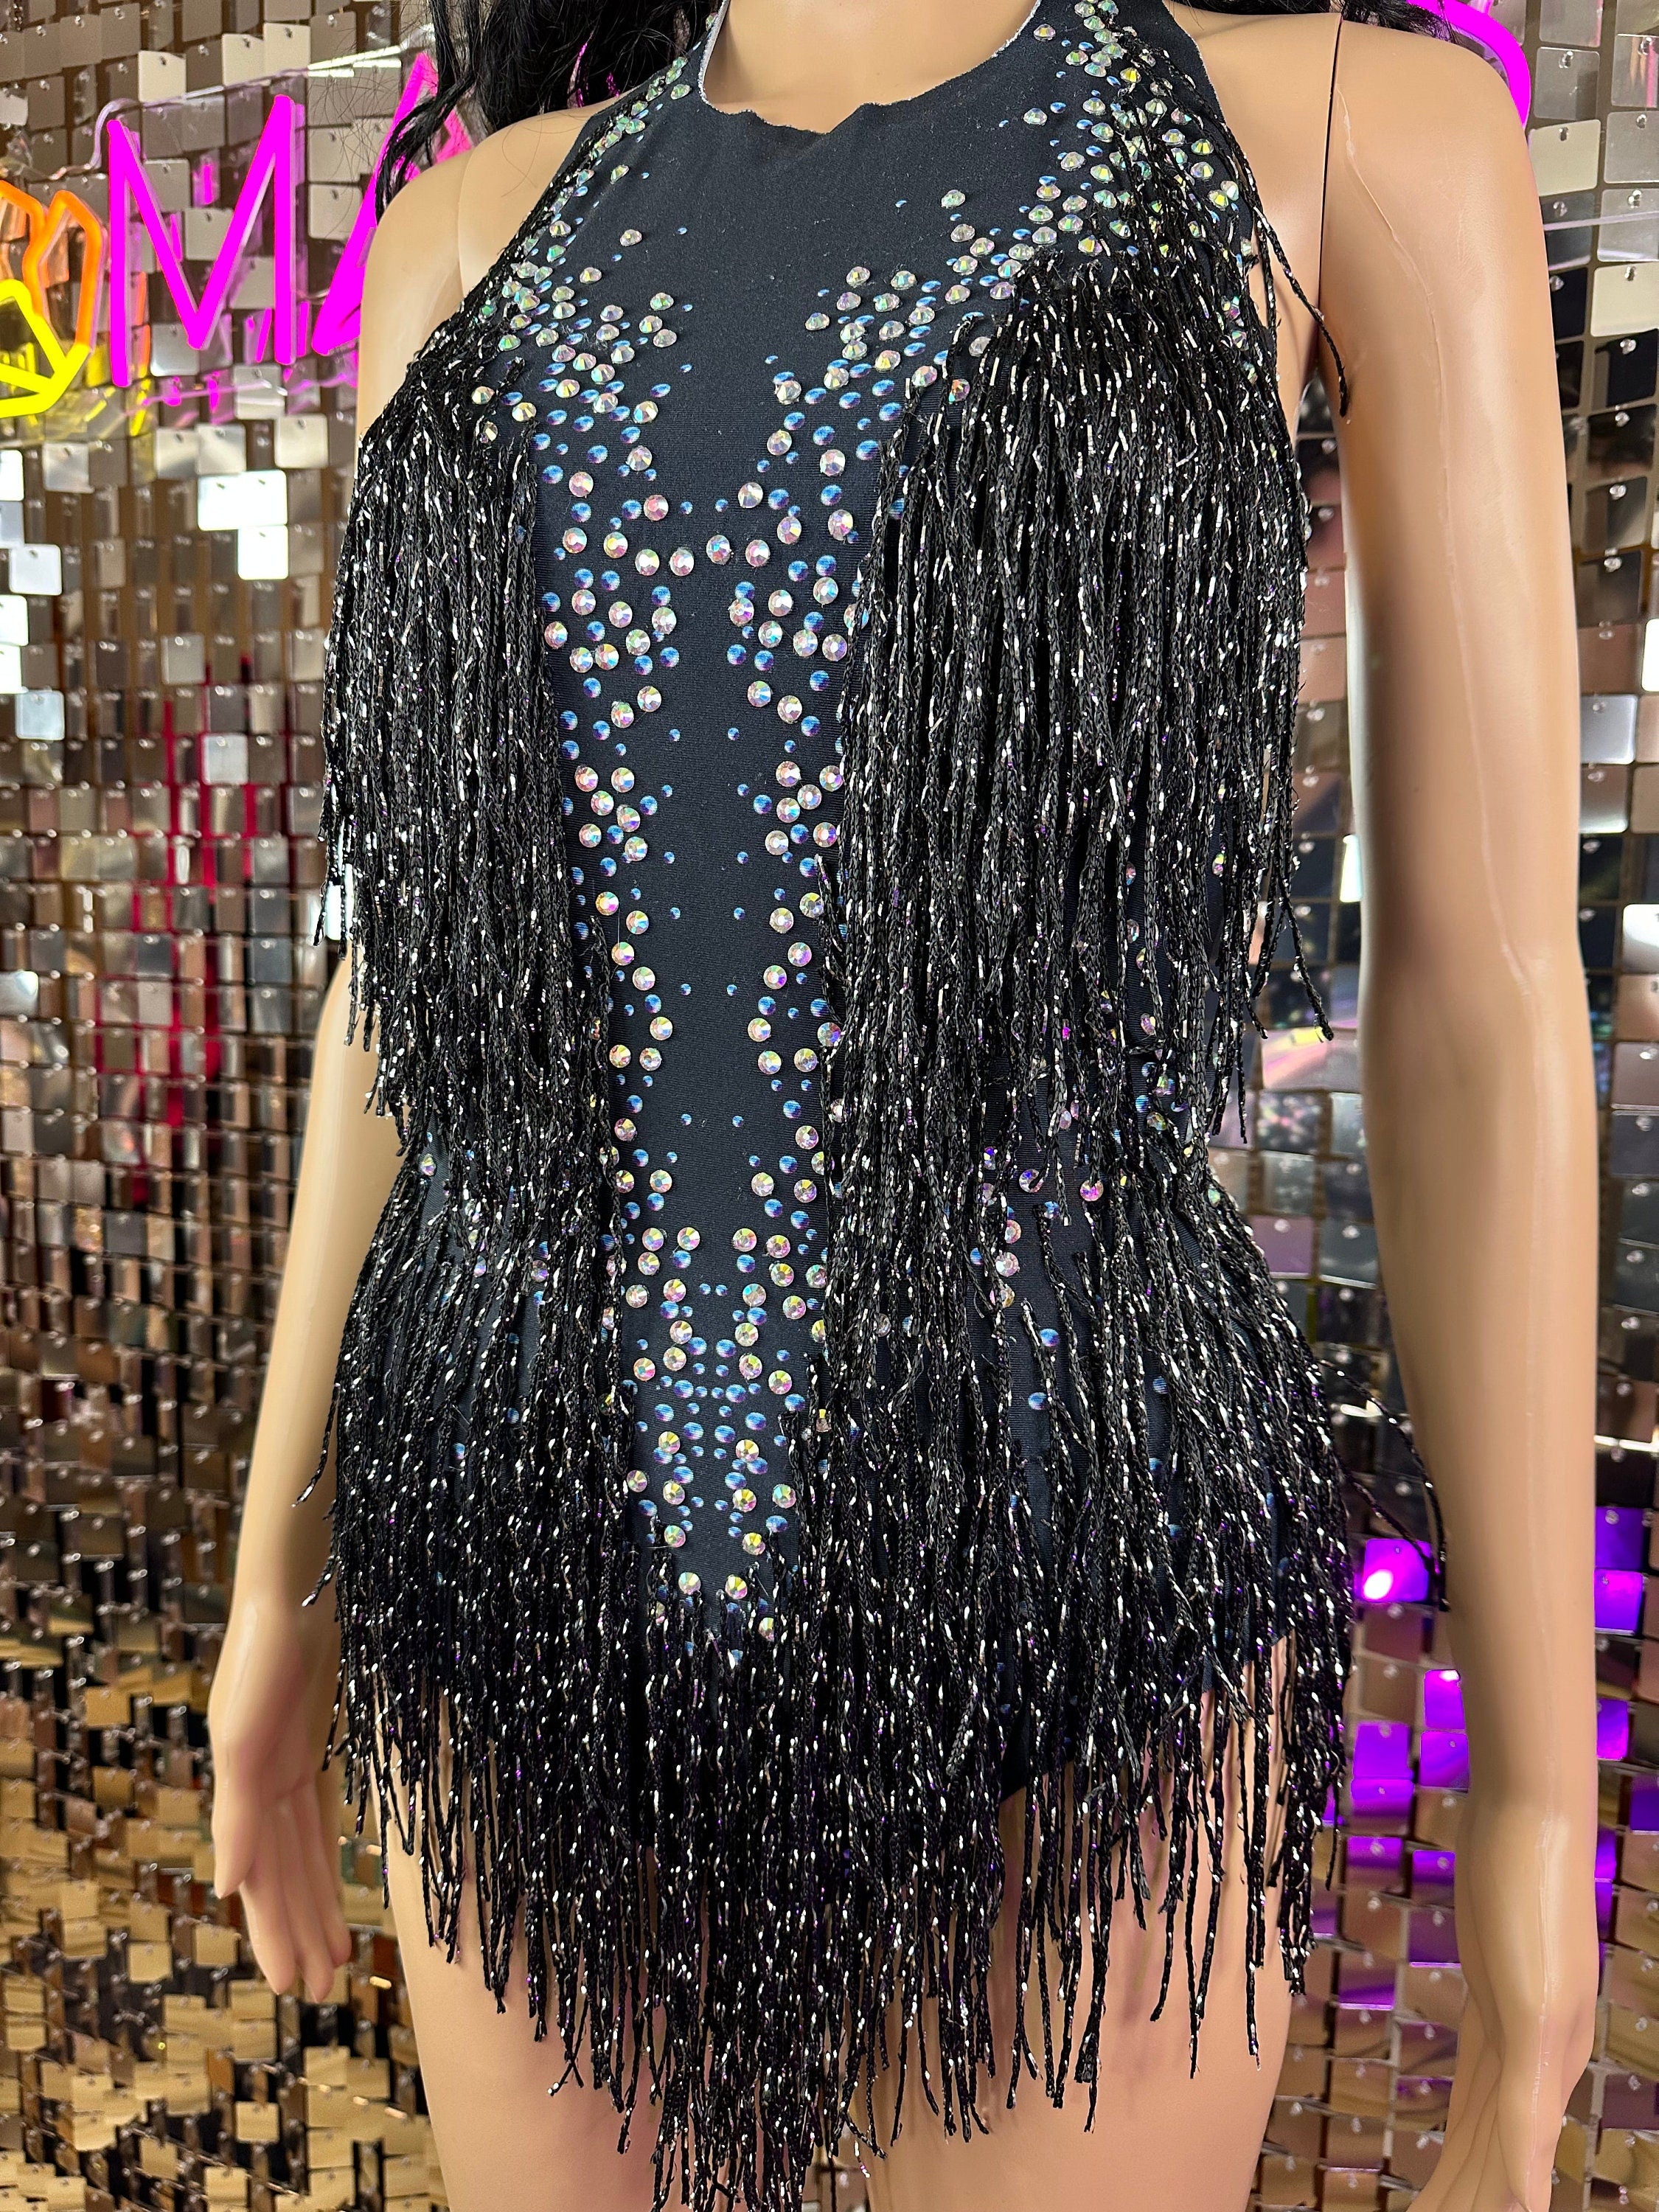 Lili Rhinestone Bodysuit / Black Tassel Festival Outfit / Cabaret New Years Eve Crystal Catsuit Burning Man / Dance Performer Leotard